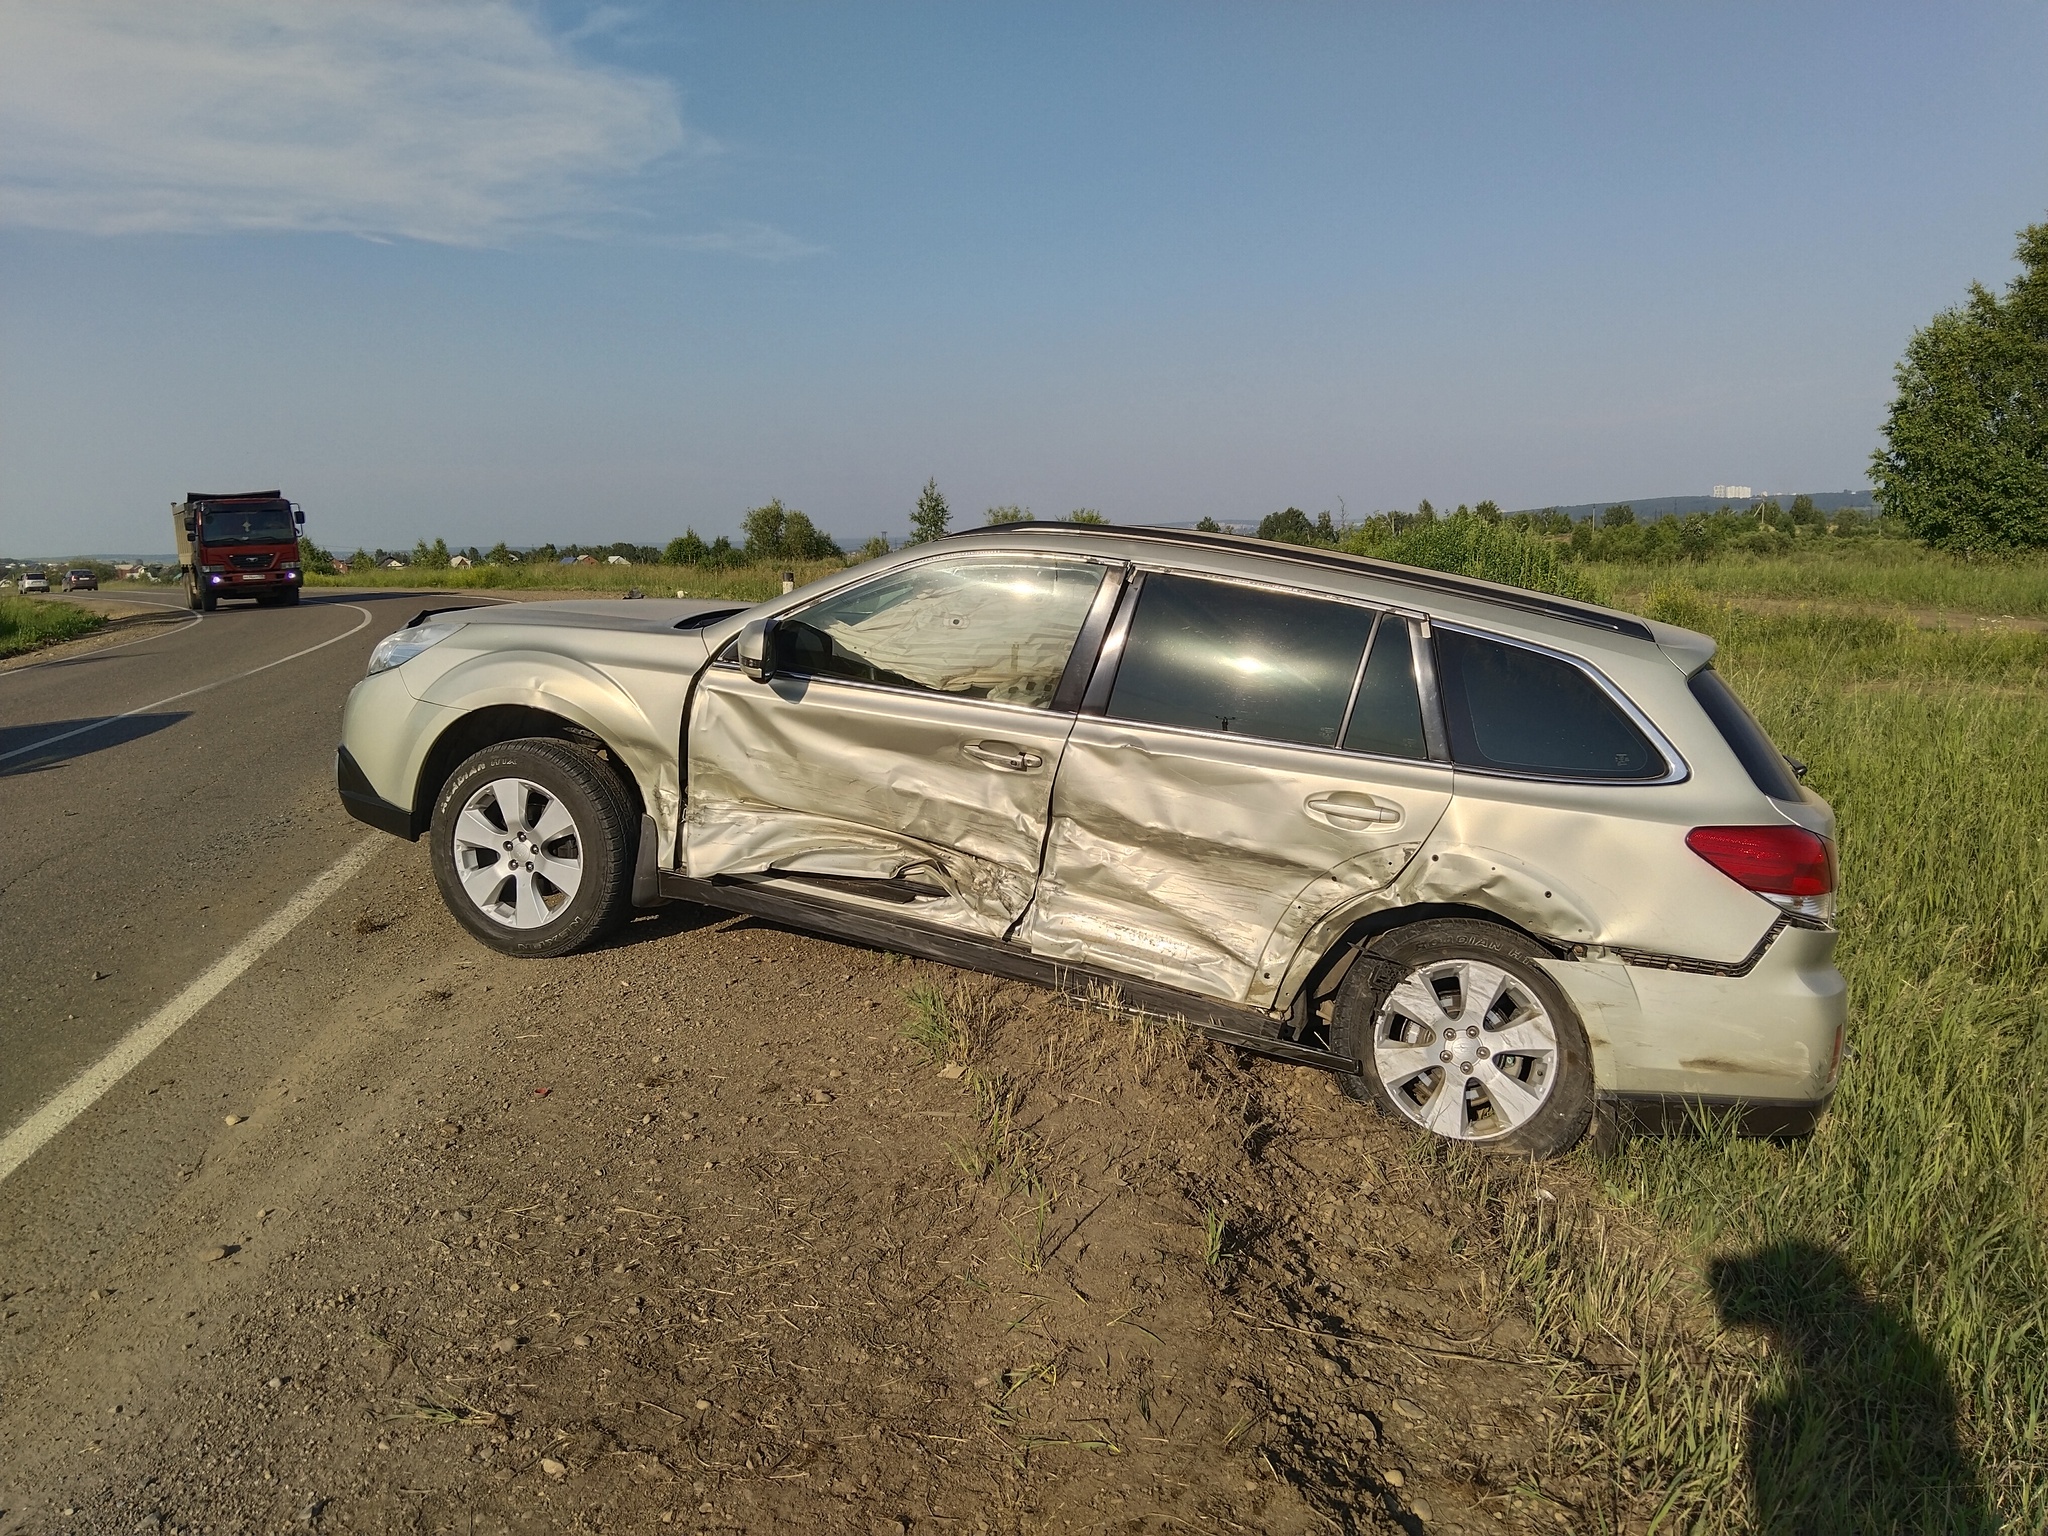 Post #11557749 - My, Crash, Road accident, Troubles